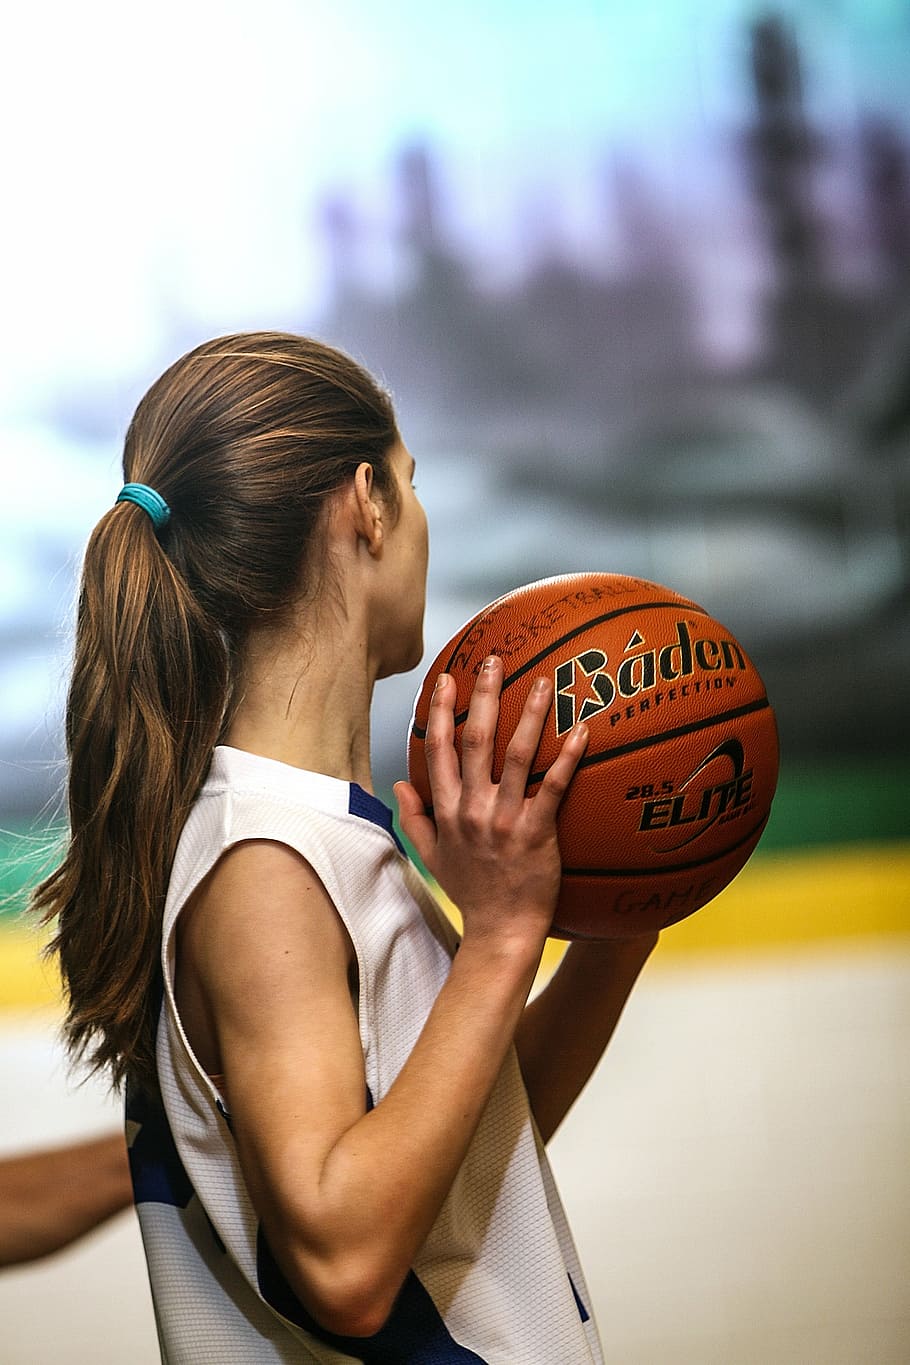 HD wallpaper: woman holding basketball, girls basketball, female, teenager